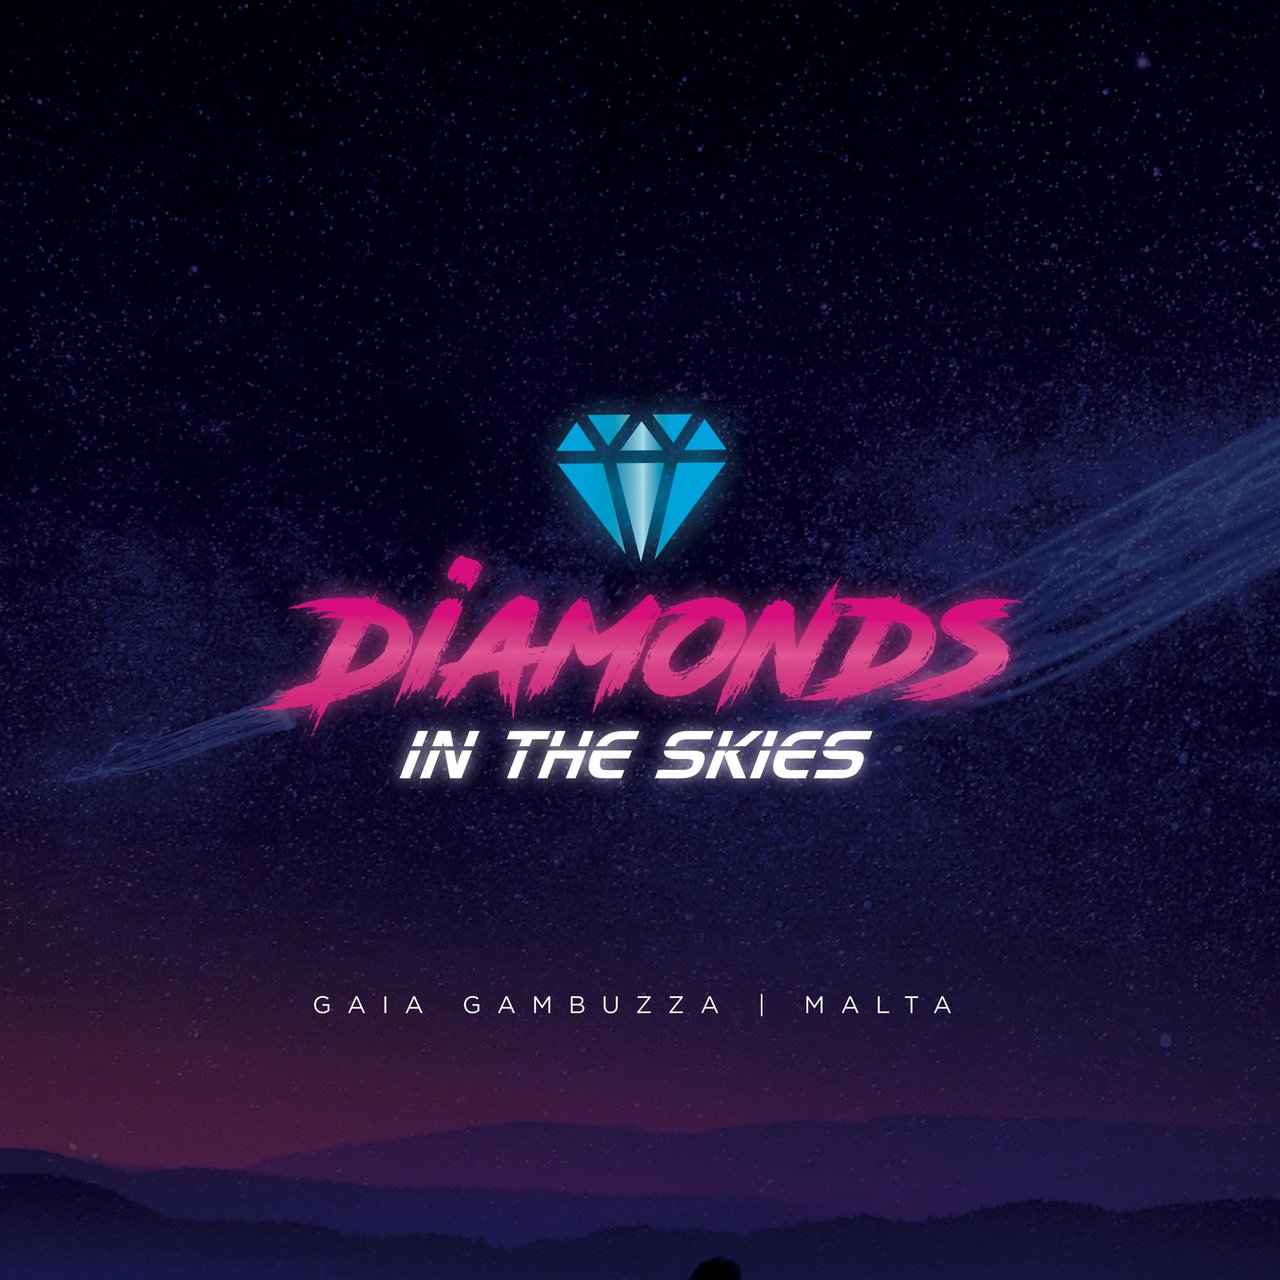 Gaia Gambuzza — Diamonds in the skies cover artwork